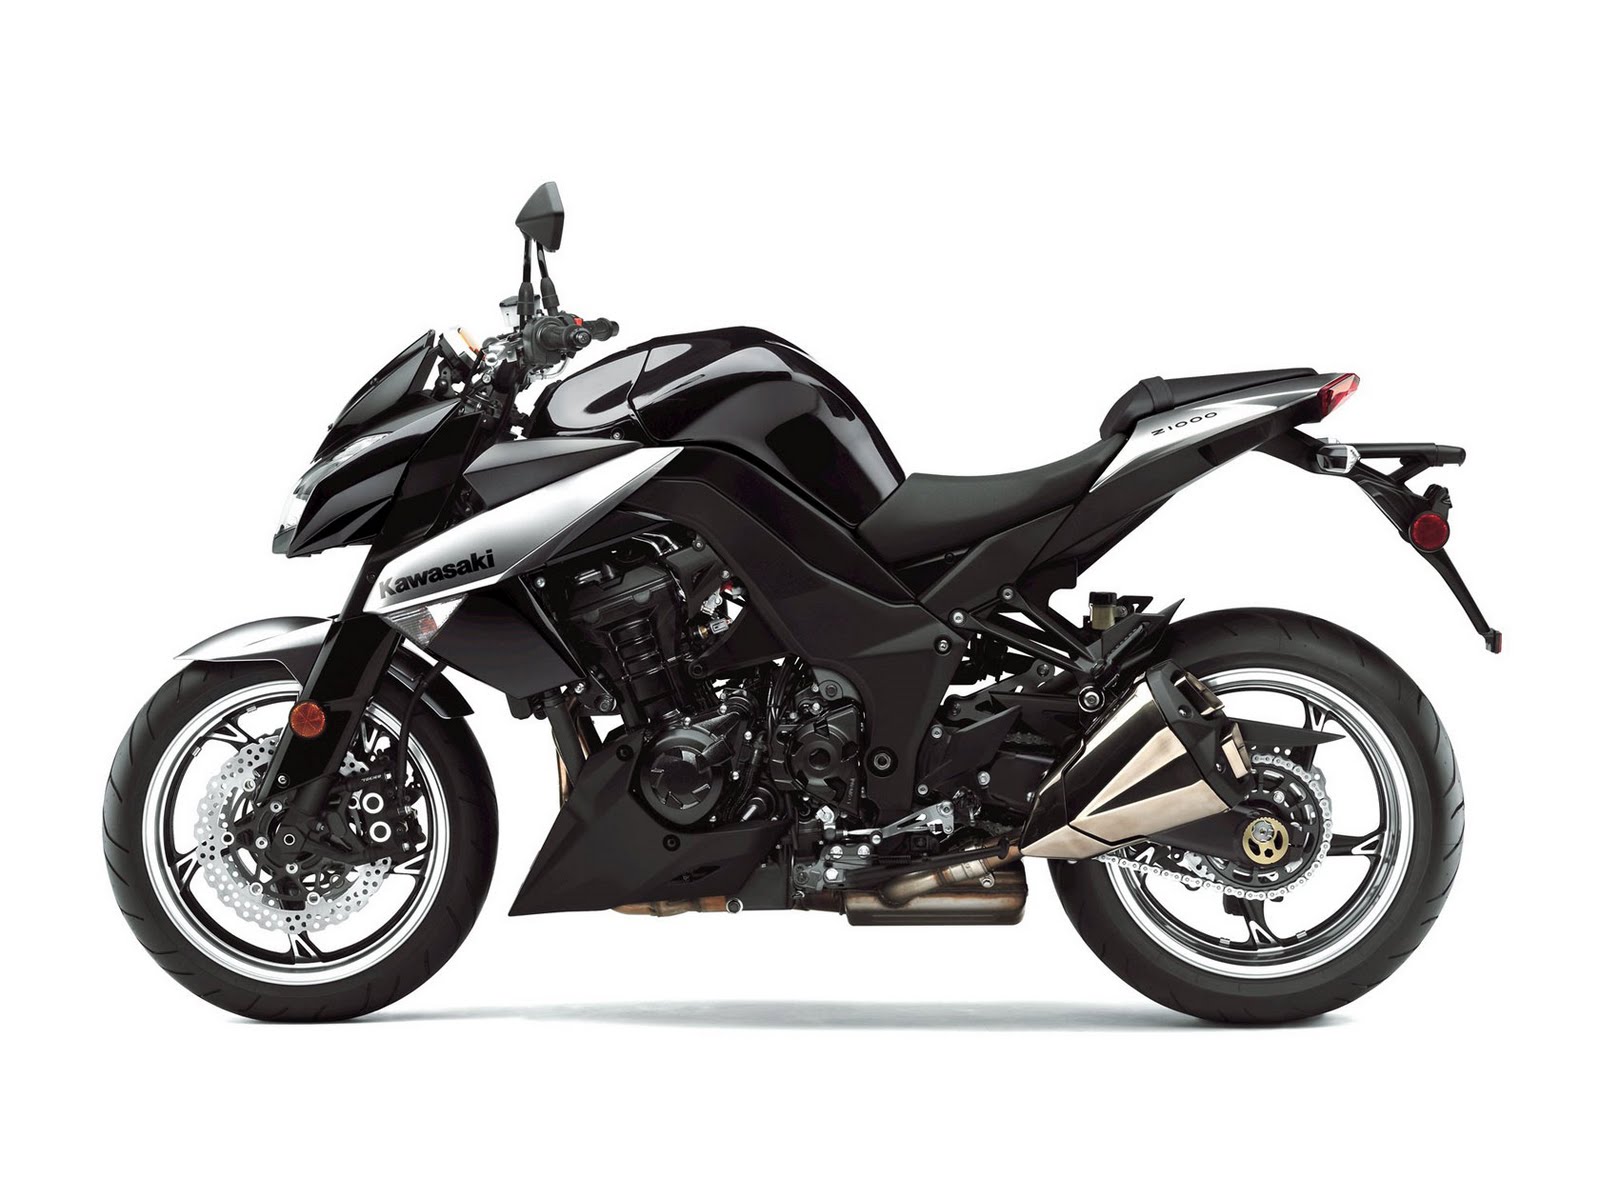 The Best Of Motorcycle: 2010 Kawasaki Z1000